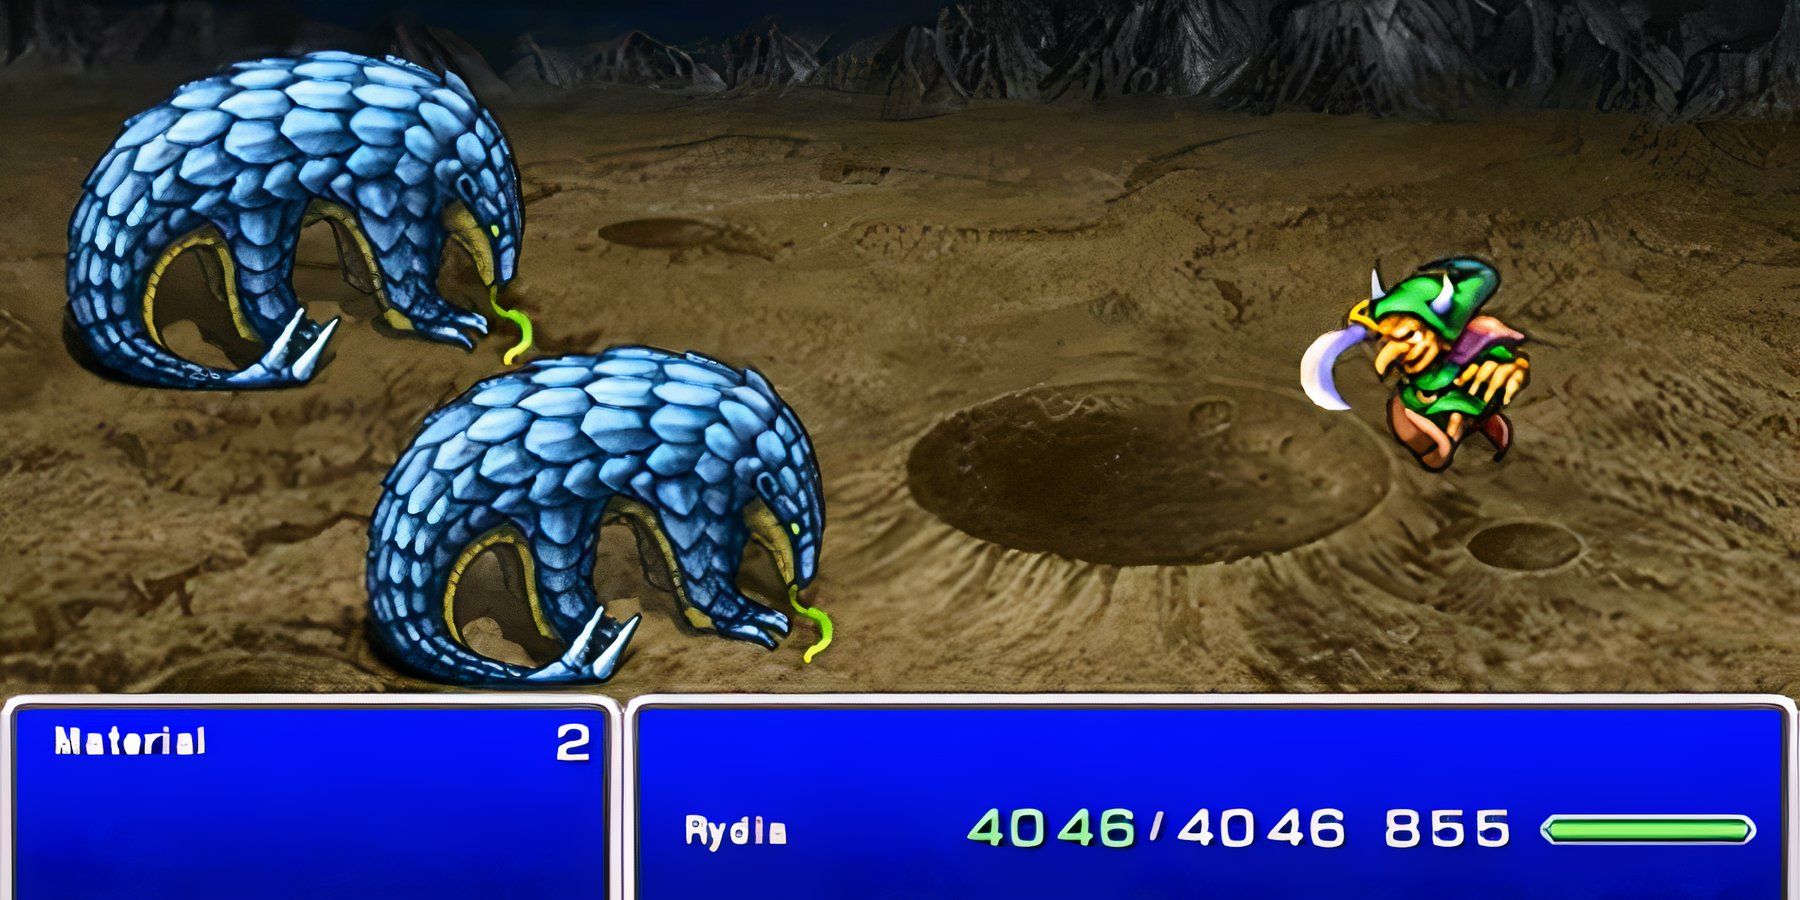 The Goblin summon from Final Fantasy 4